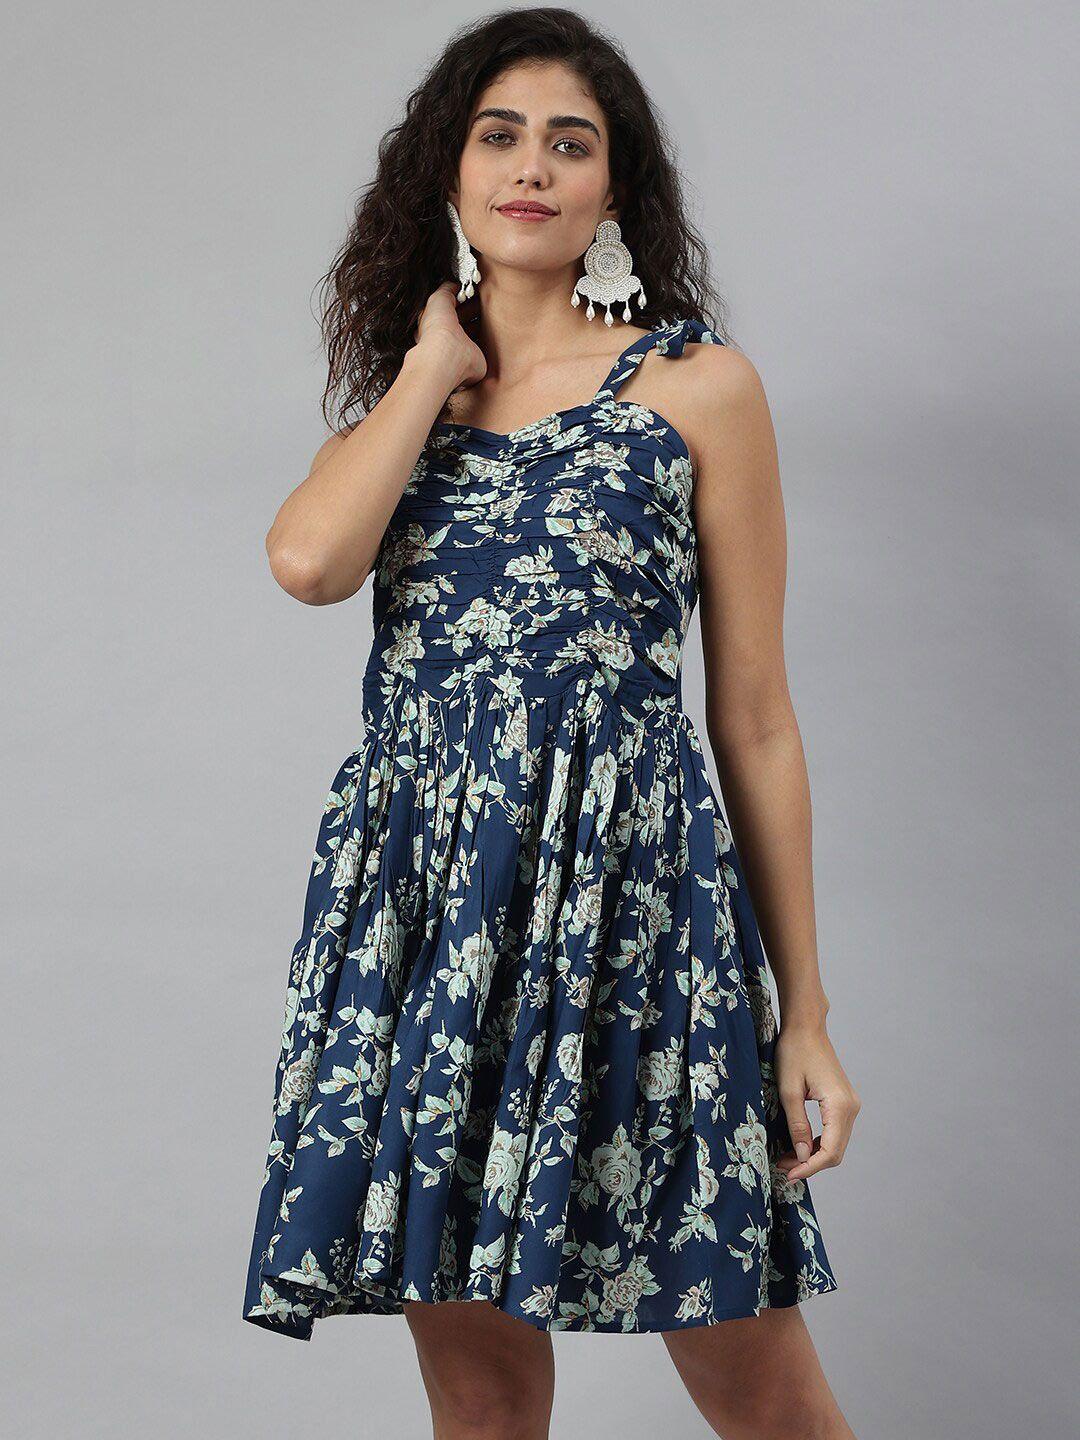 kalini blue floral dress